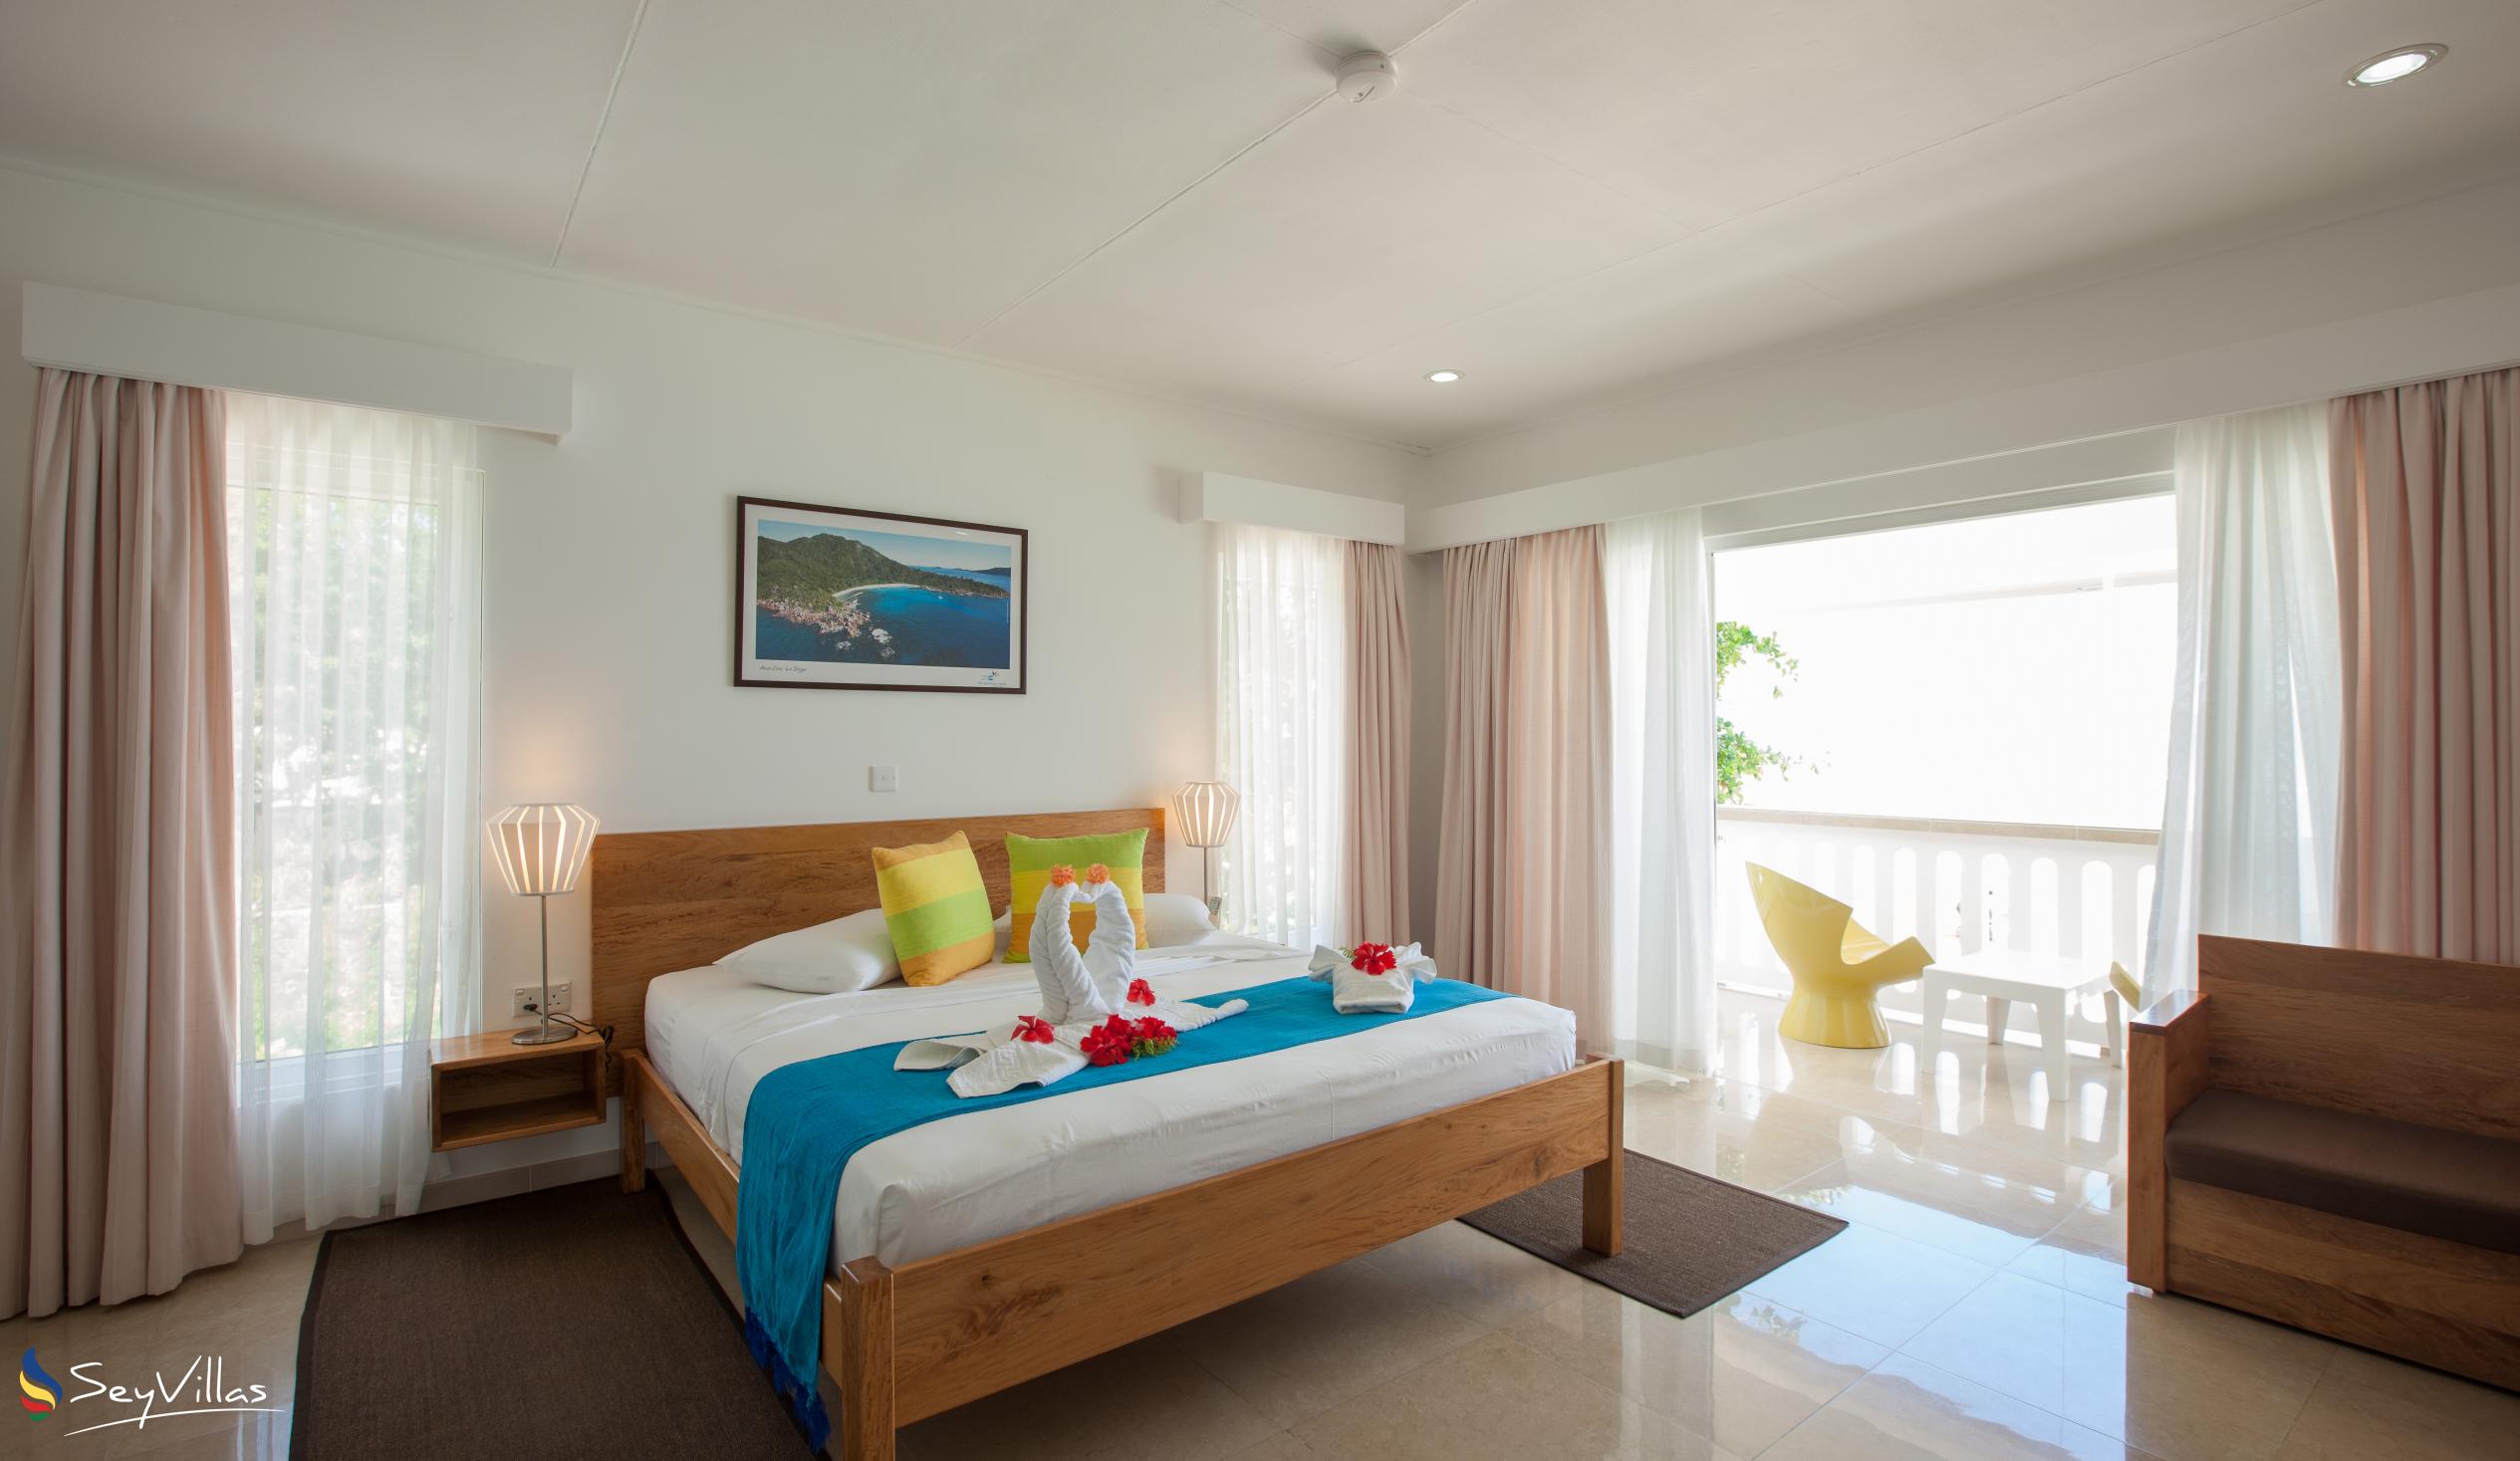 Photo 2: Marie-France Beach Front Apartments - Standard Room - La Digue (Seychelles)